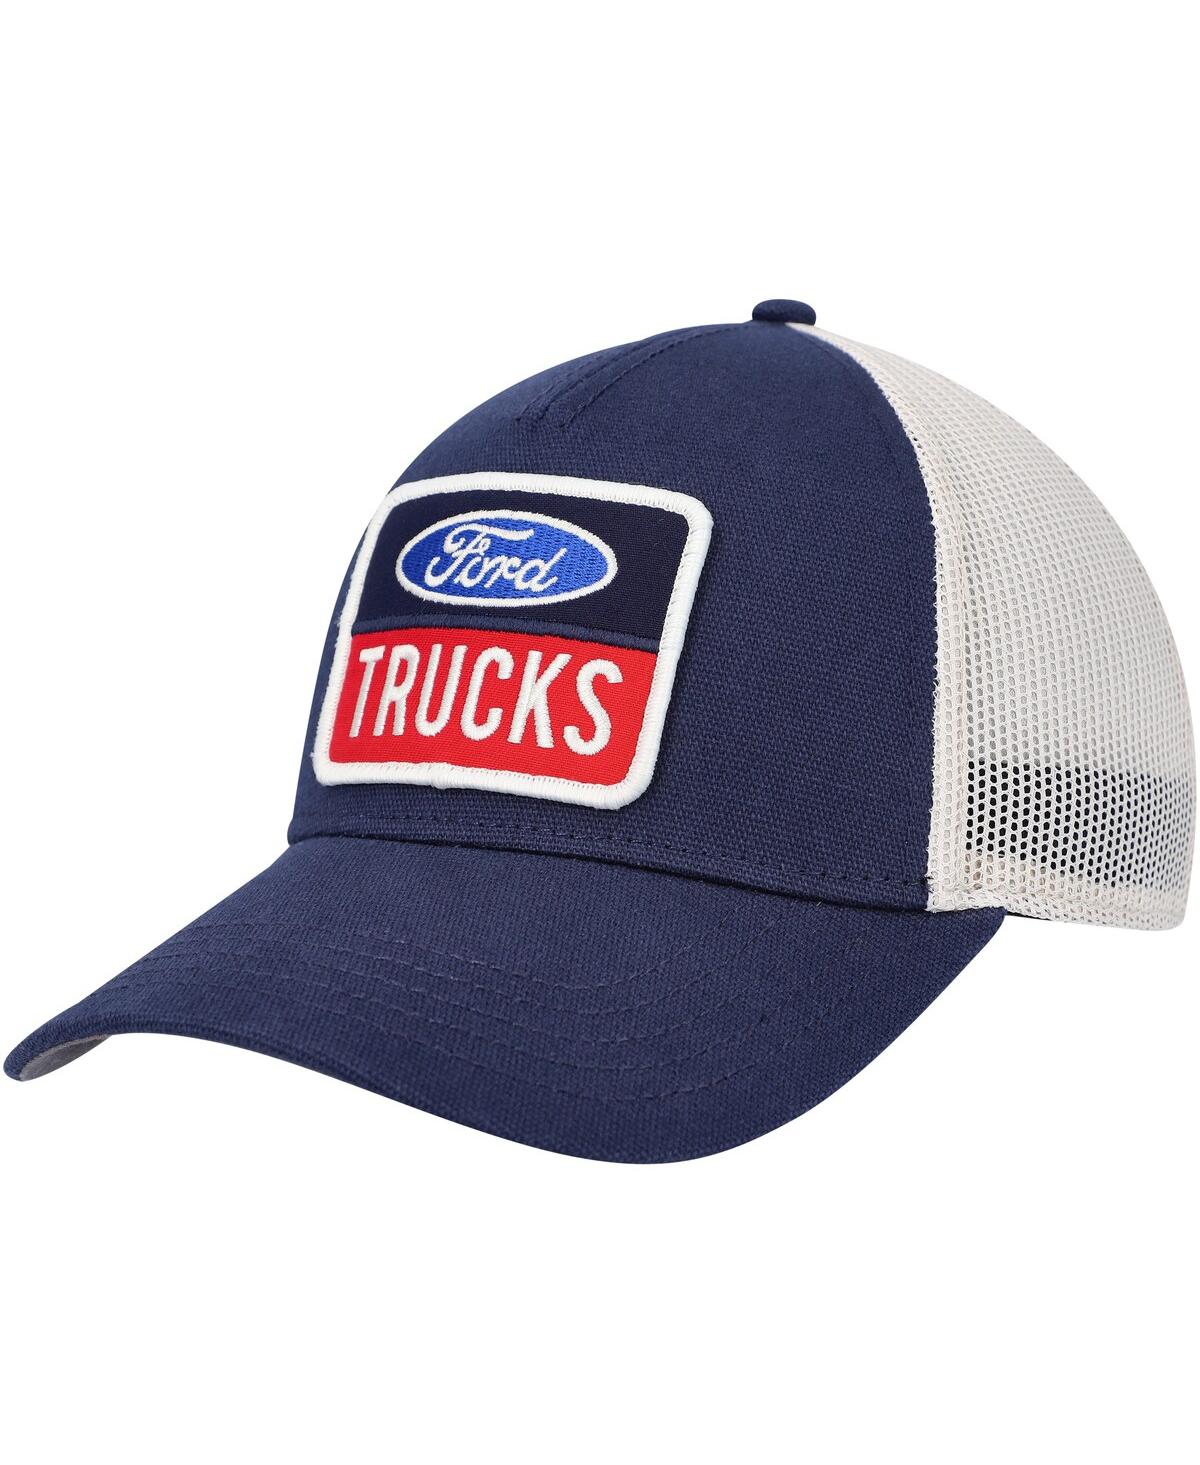 American Needle Men's  Navy Ford Trucks Twill Valin Patch Snapback Hat